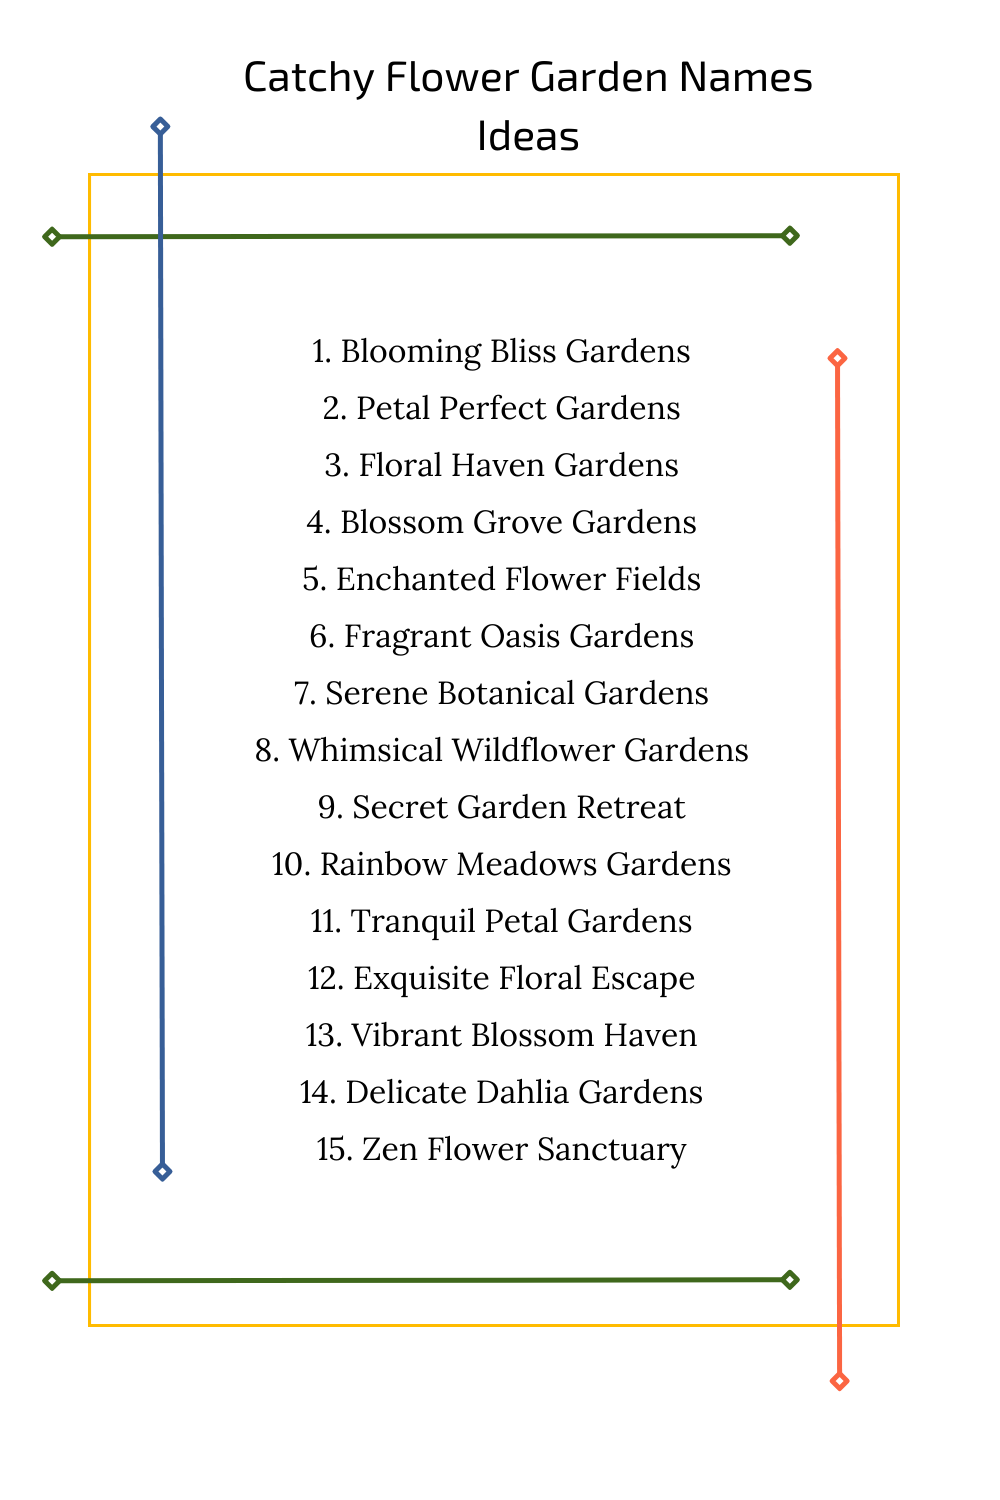 Catchy Flower Garden Names Ideas